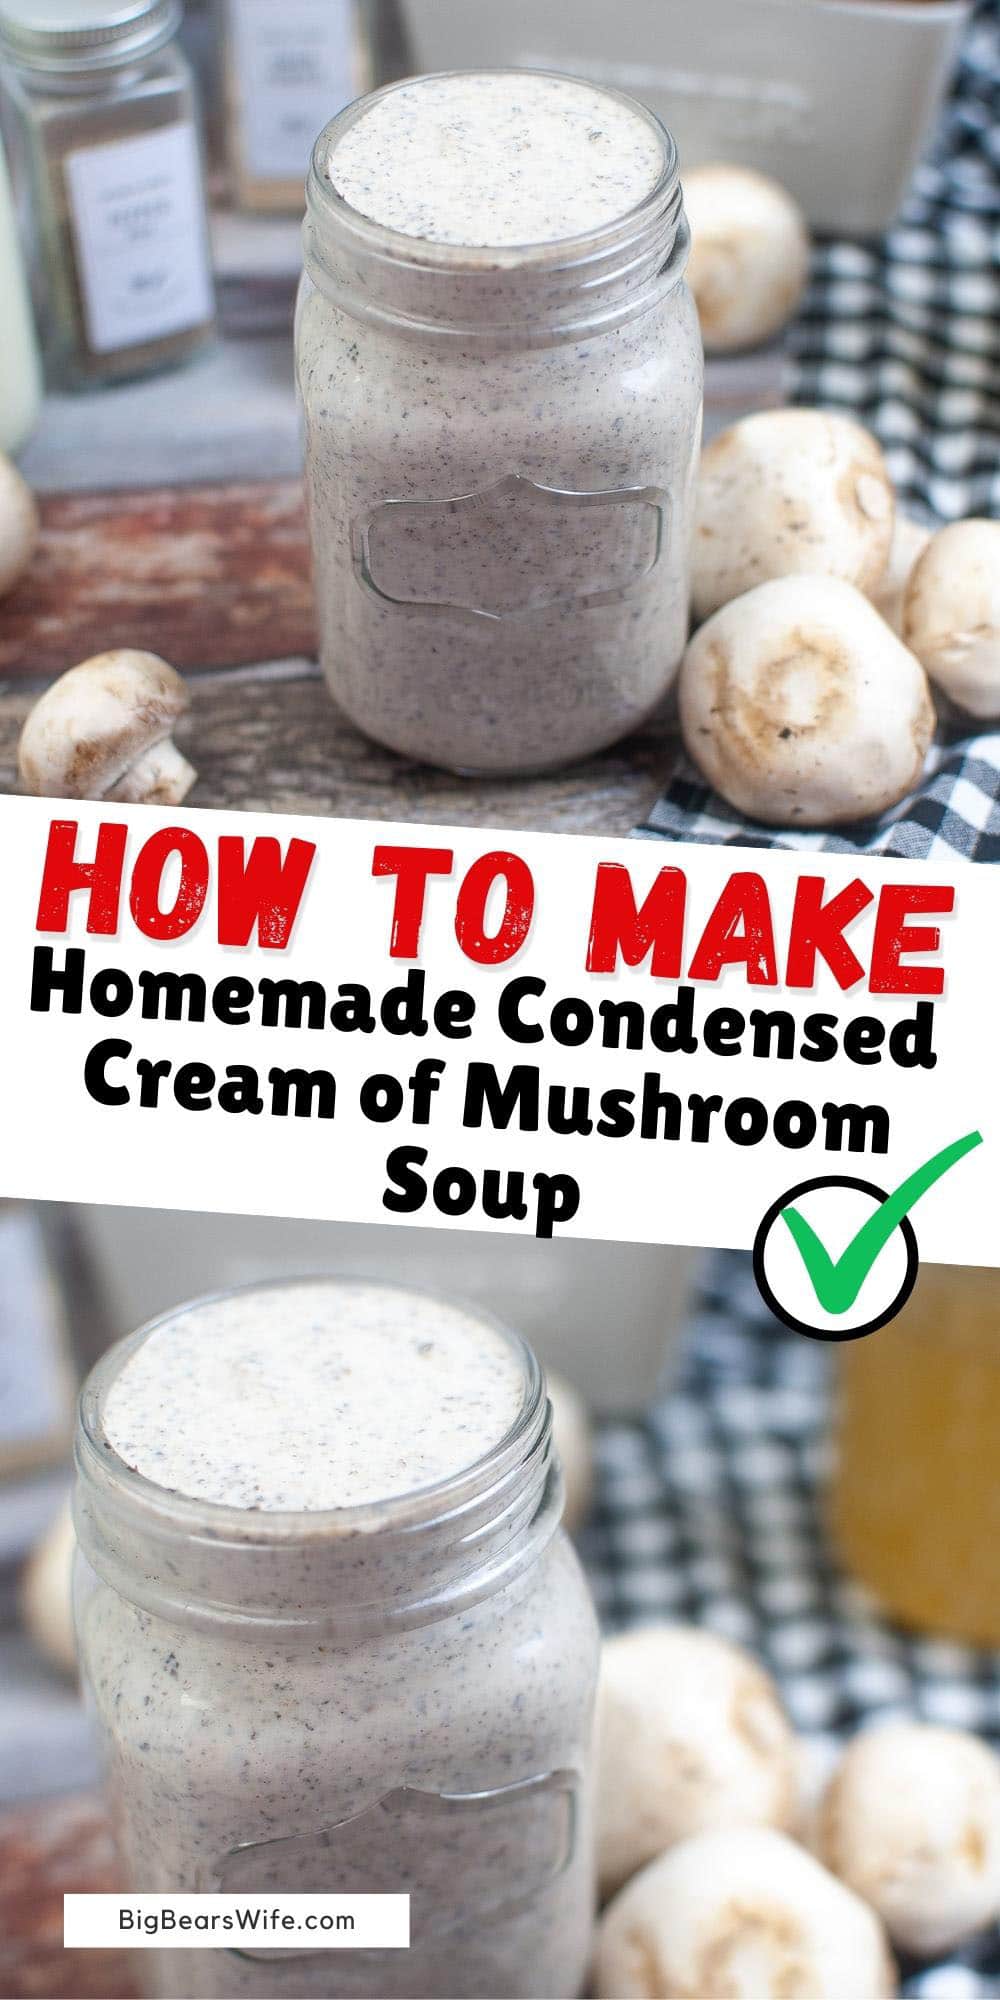 Homemade Condensed Cream of Mushroom Soup via @bigbearswife